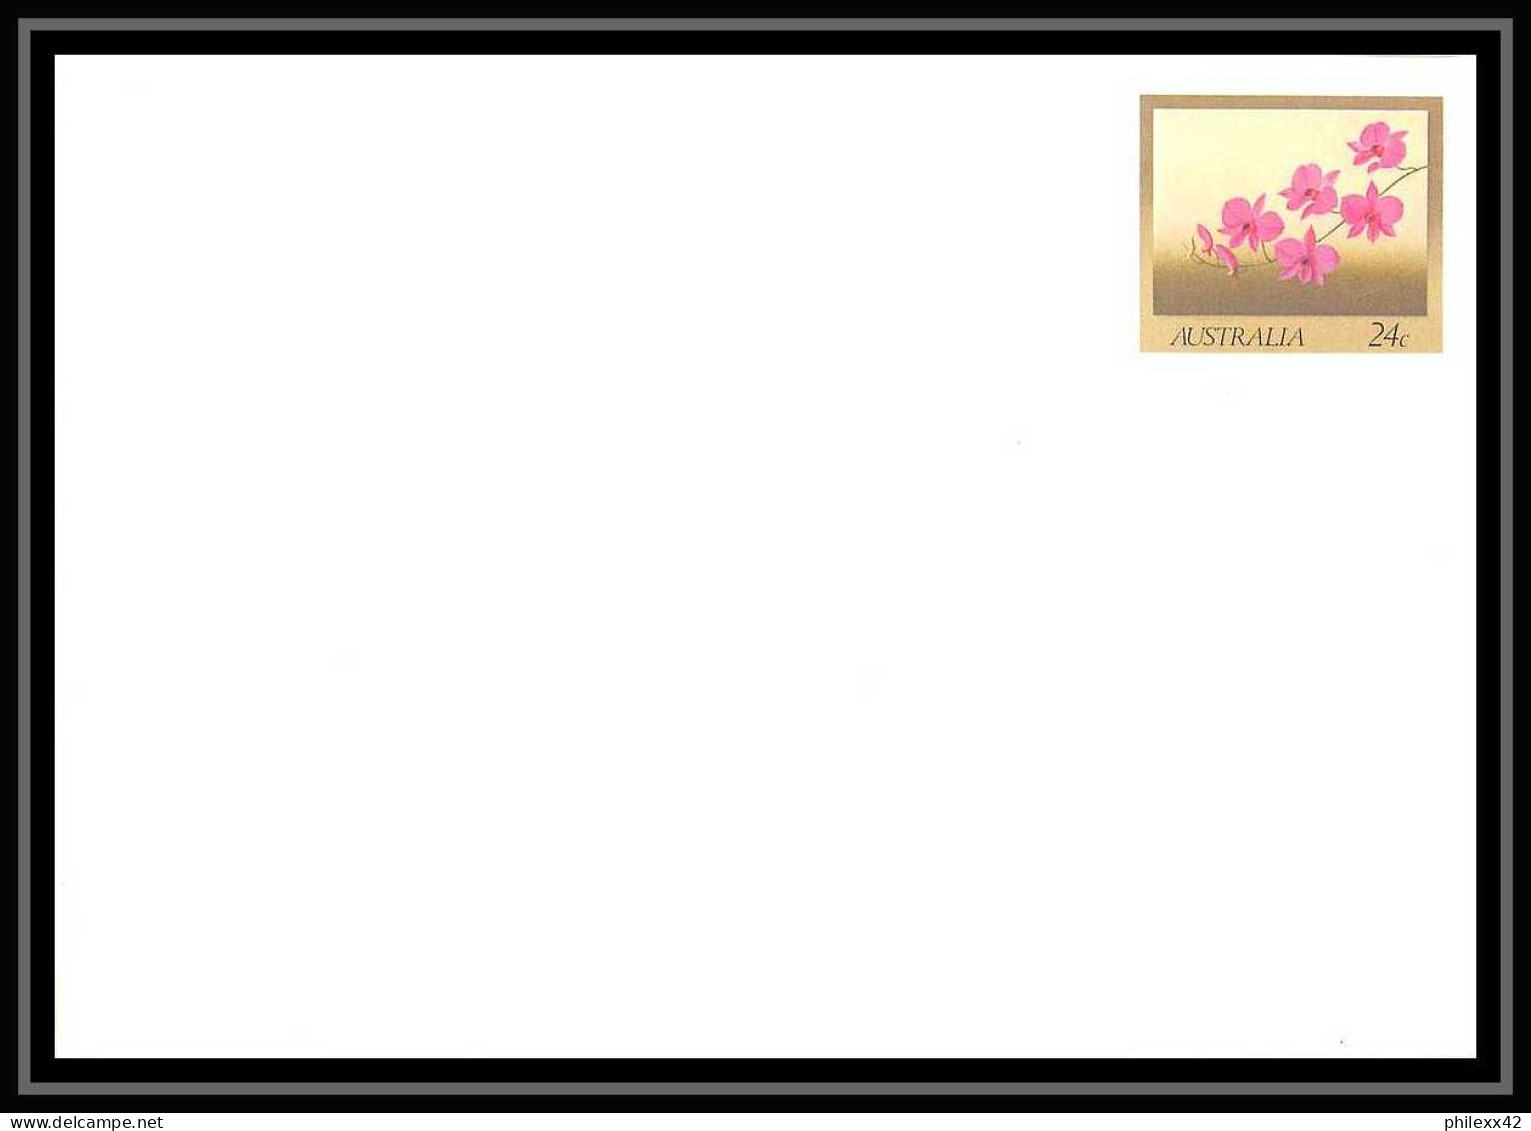 4496 24c Enveloppe Australie (australia) Neuf Tb Fleurs (plants - Flowers) Entier Postal Stationery - Enteros Postales